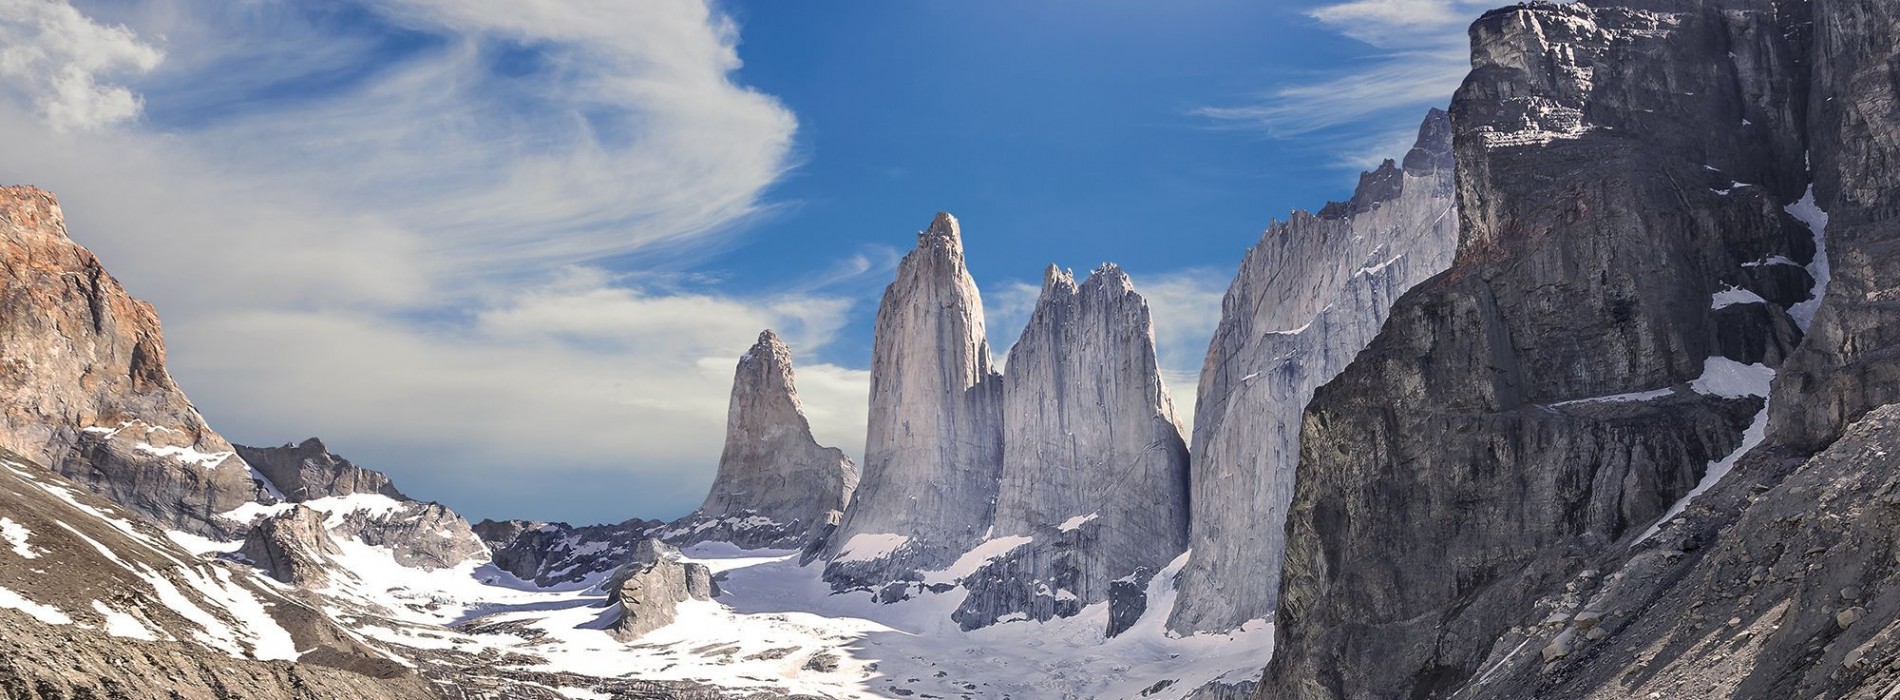 Torres_del_Paine_Patagonia.jpg